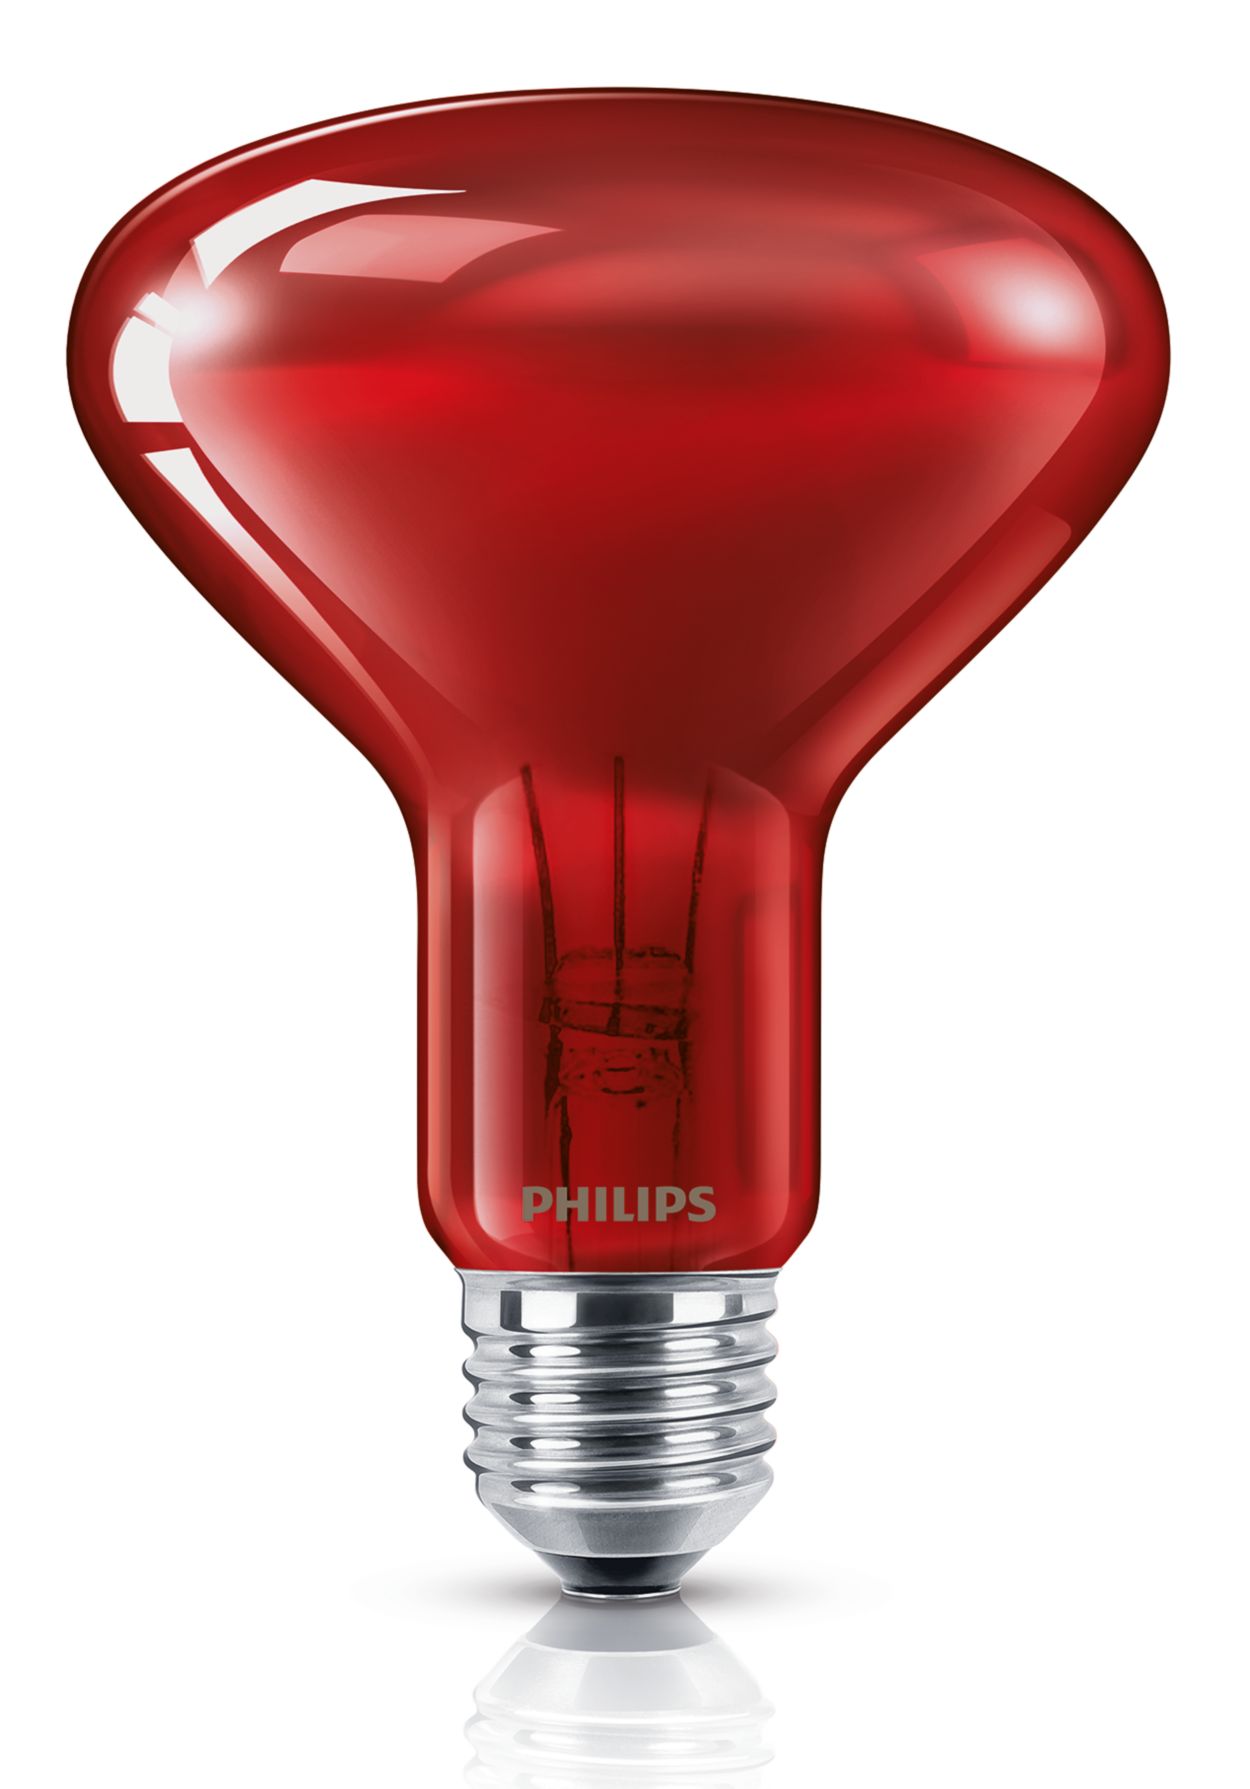 R95 IR 220-240V Red HG | 923244544201 | Philips lighting